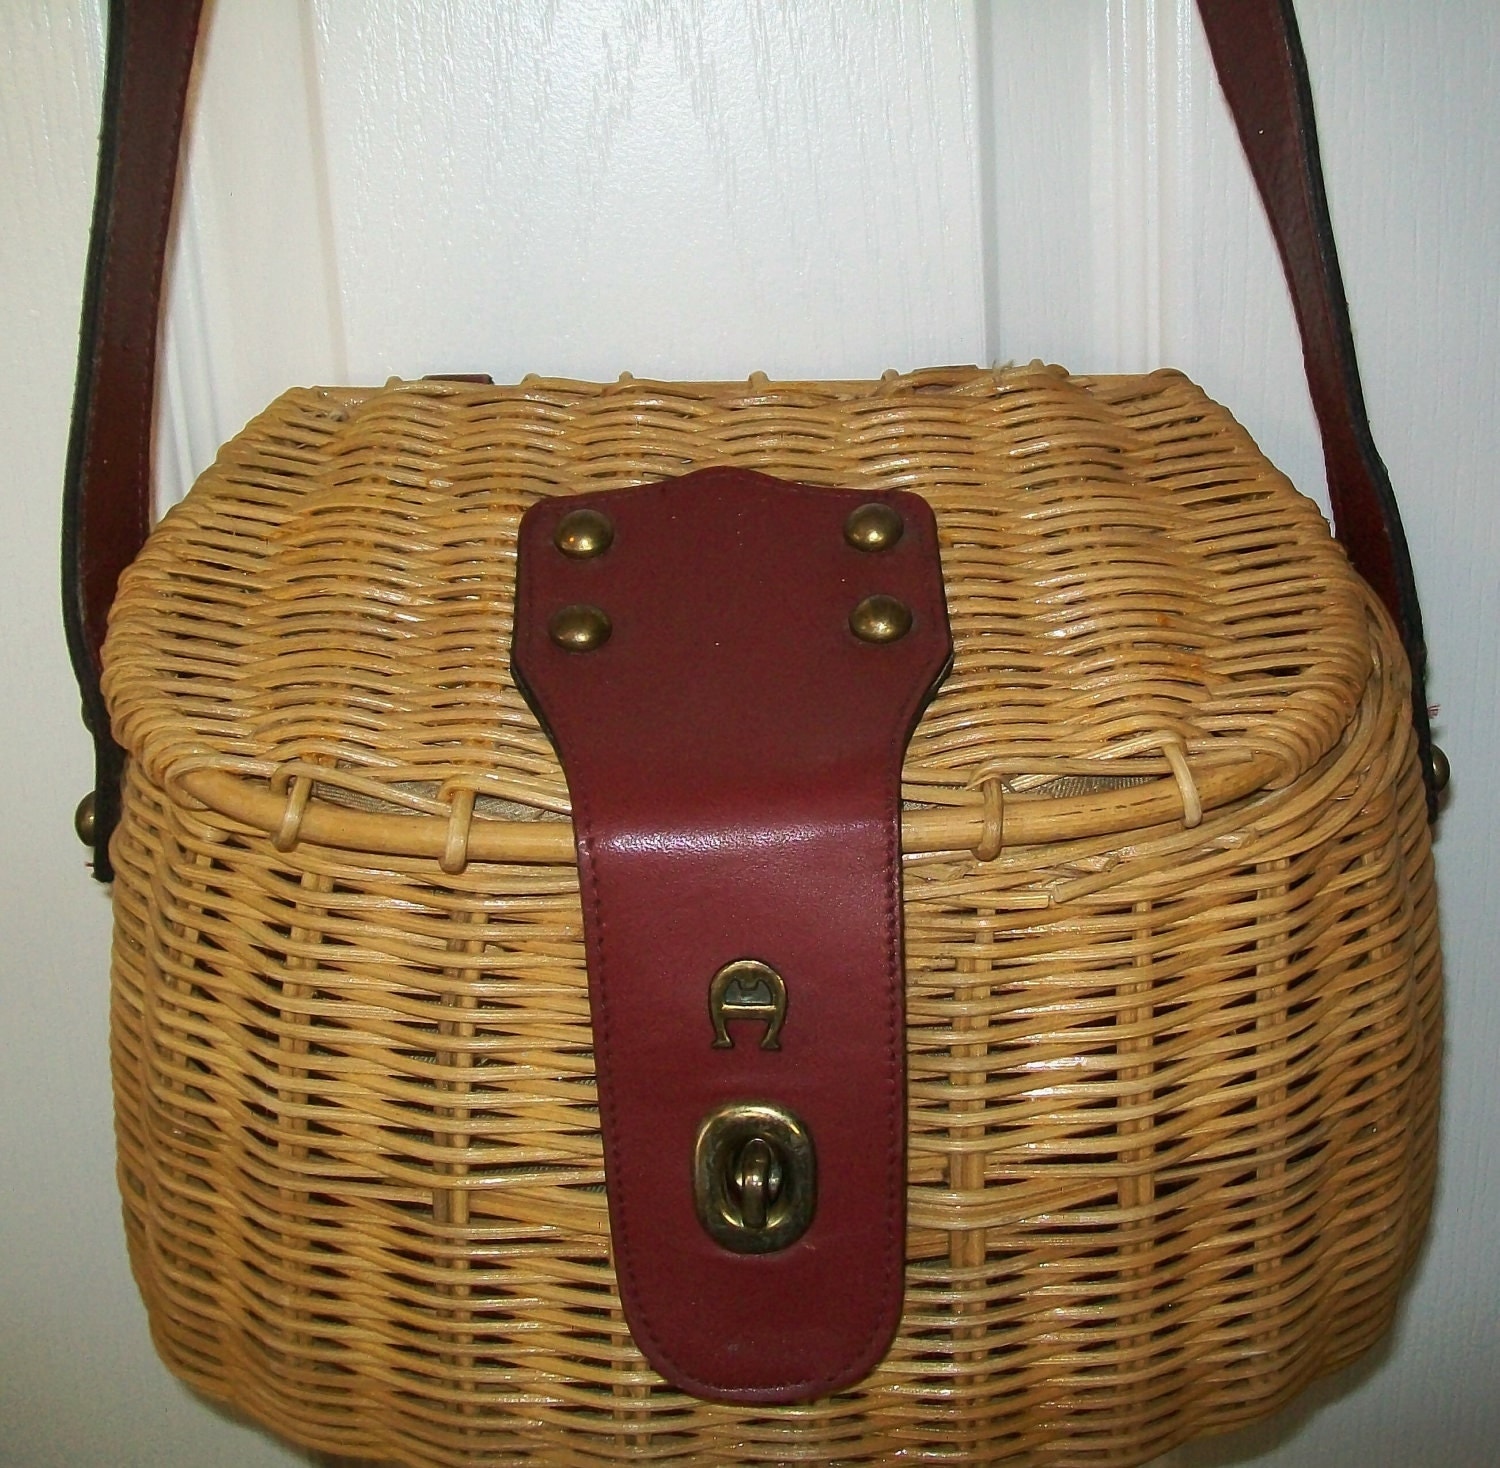 SALE Vintage wicker handbag Etienne Aigner purse hand